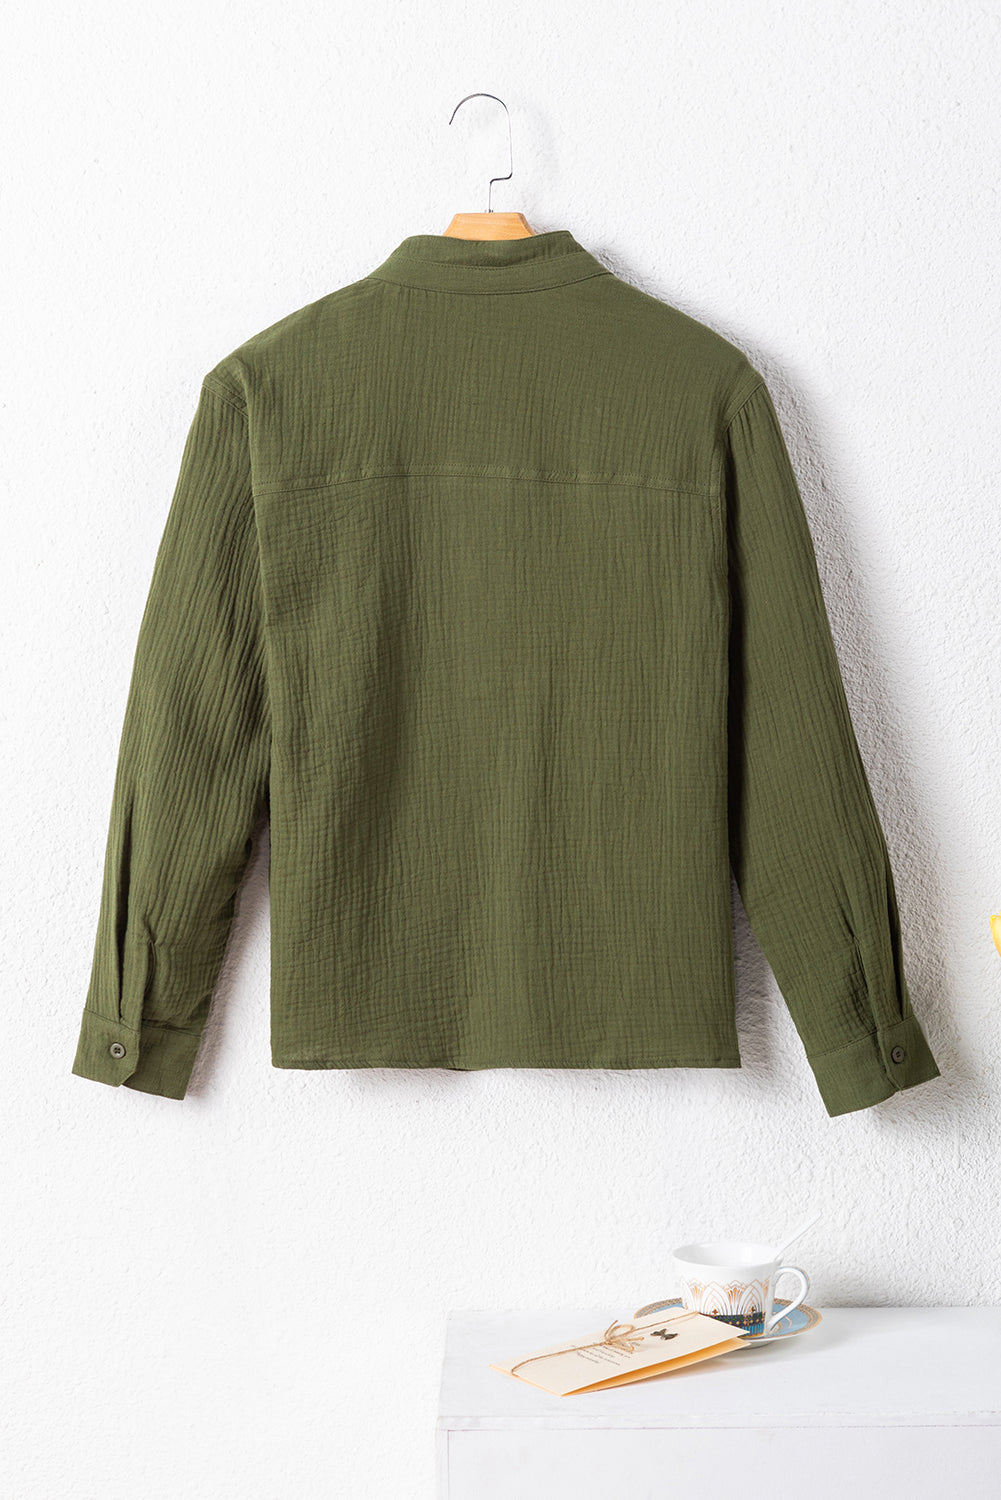 Jungle Green Crinkle Textured Button Up Long Sleeve Shirt